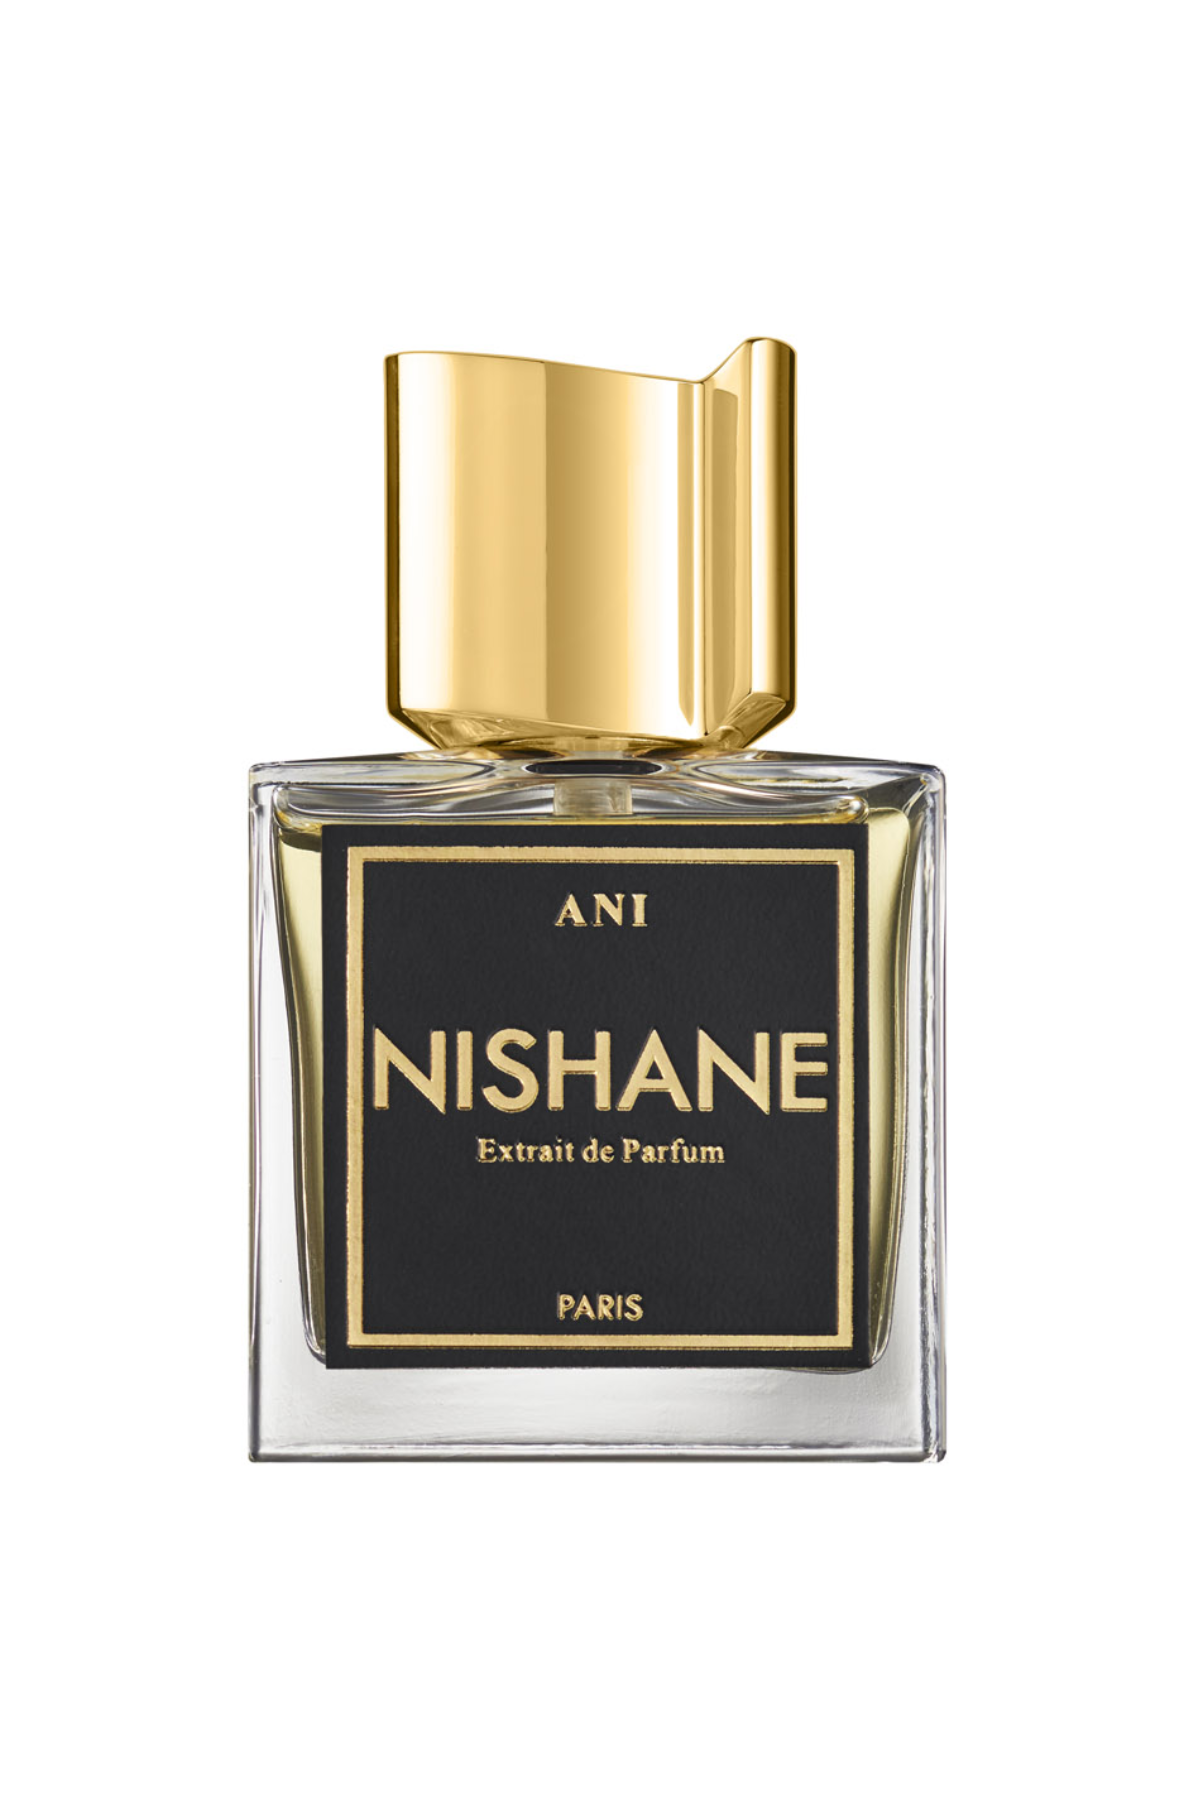 A bottle of Nishane Ani perfume against a white background.